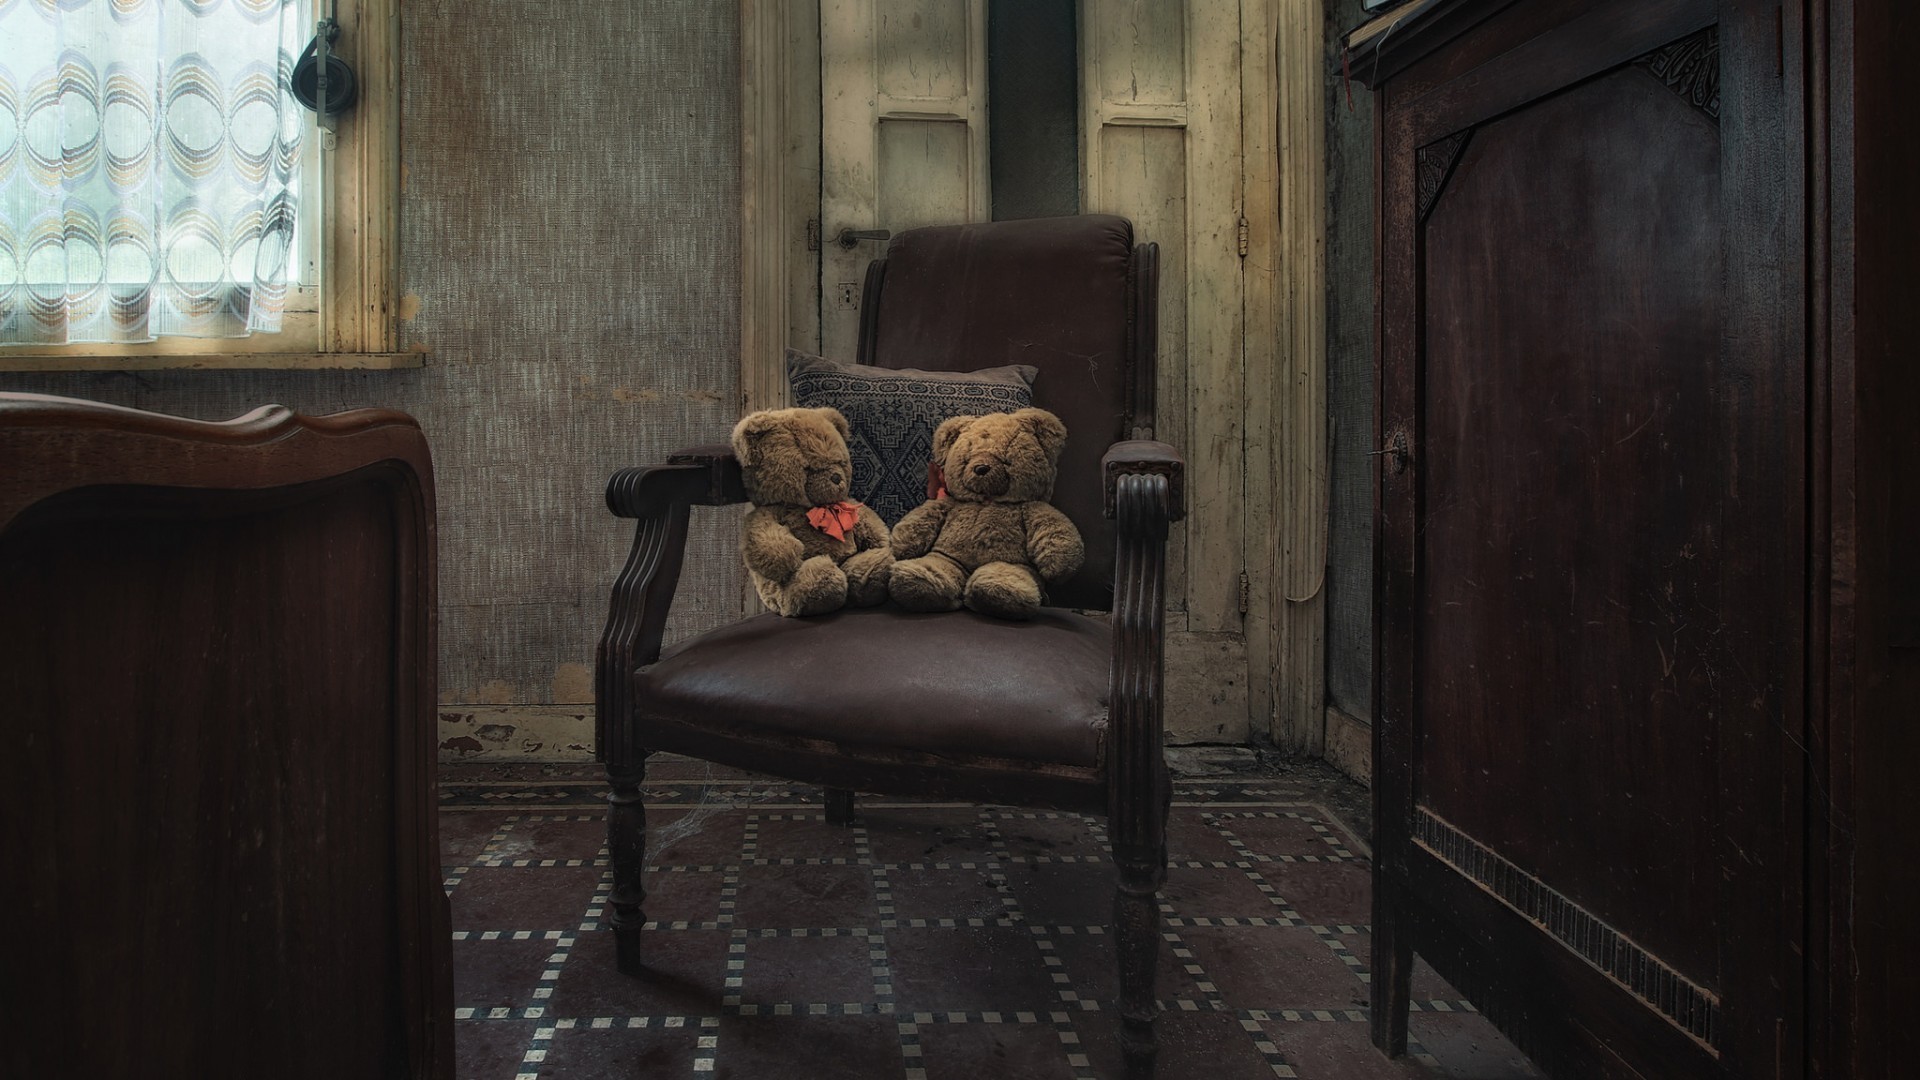 General 1920x1080 interior room chair wall cupboard teddy bears pillow window door abandoned plush toy